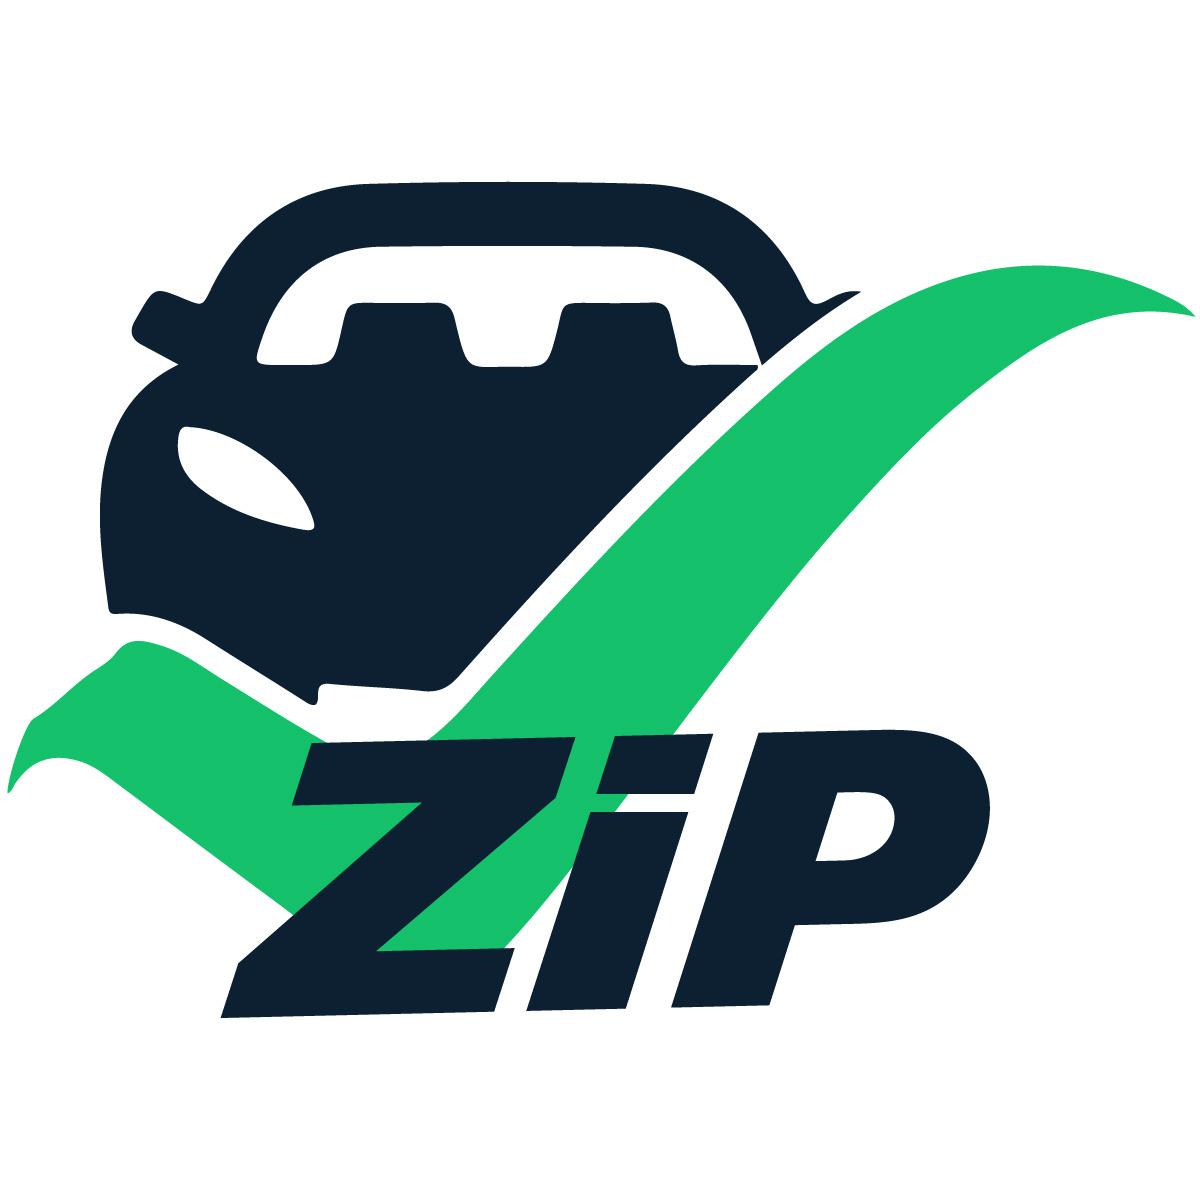 Zip Cash for Cars Removals Maribyrnong